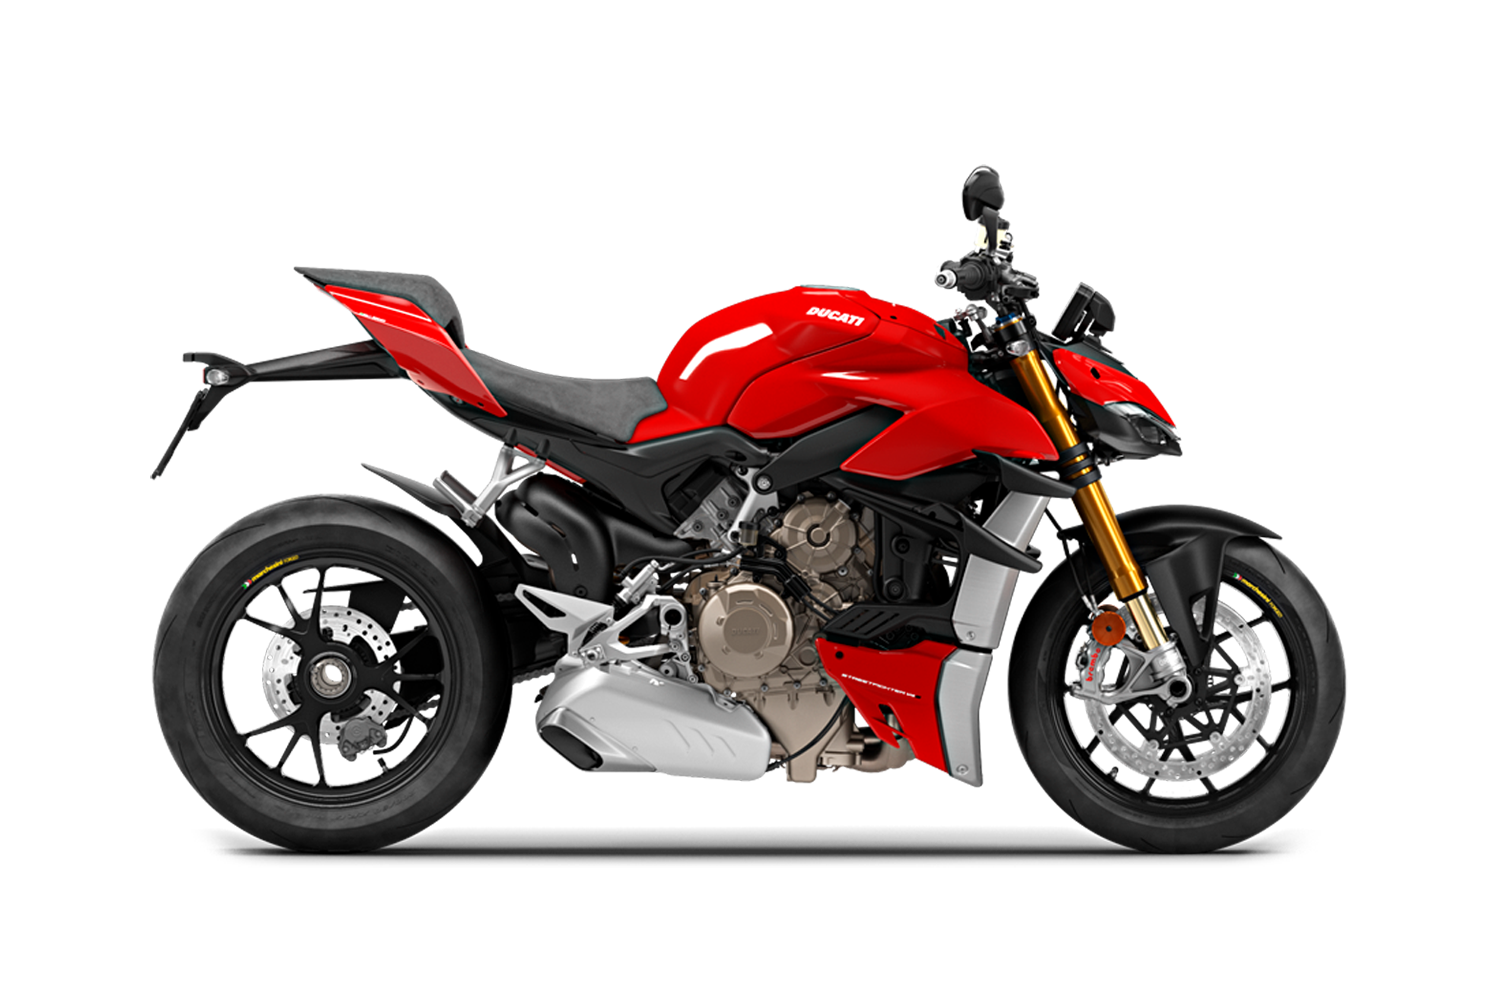 Ducati Motorcycles New Models Reviewmotors.co